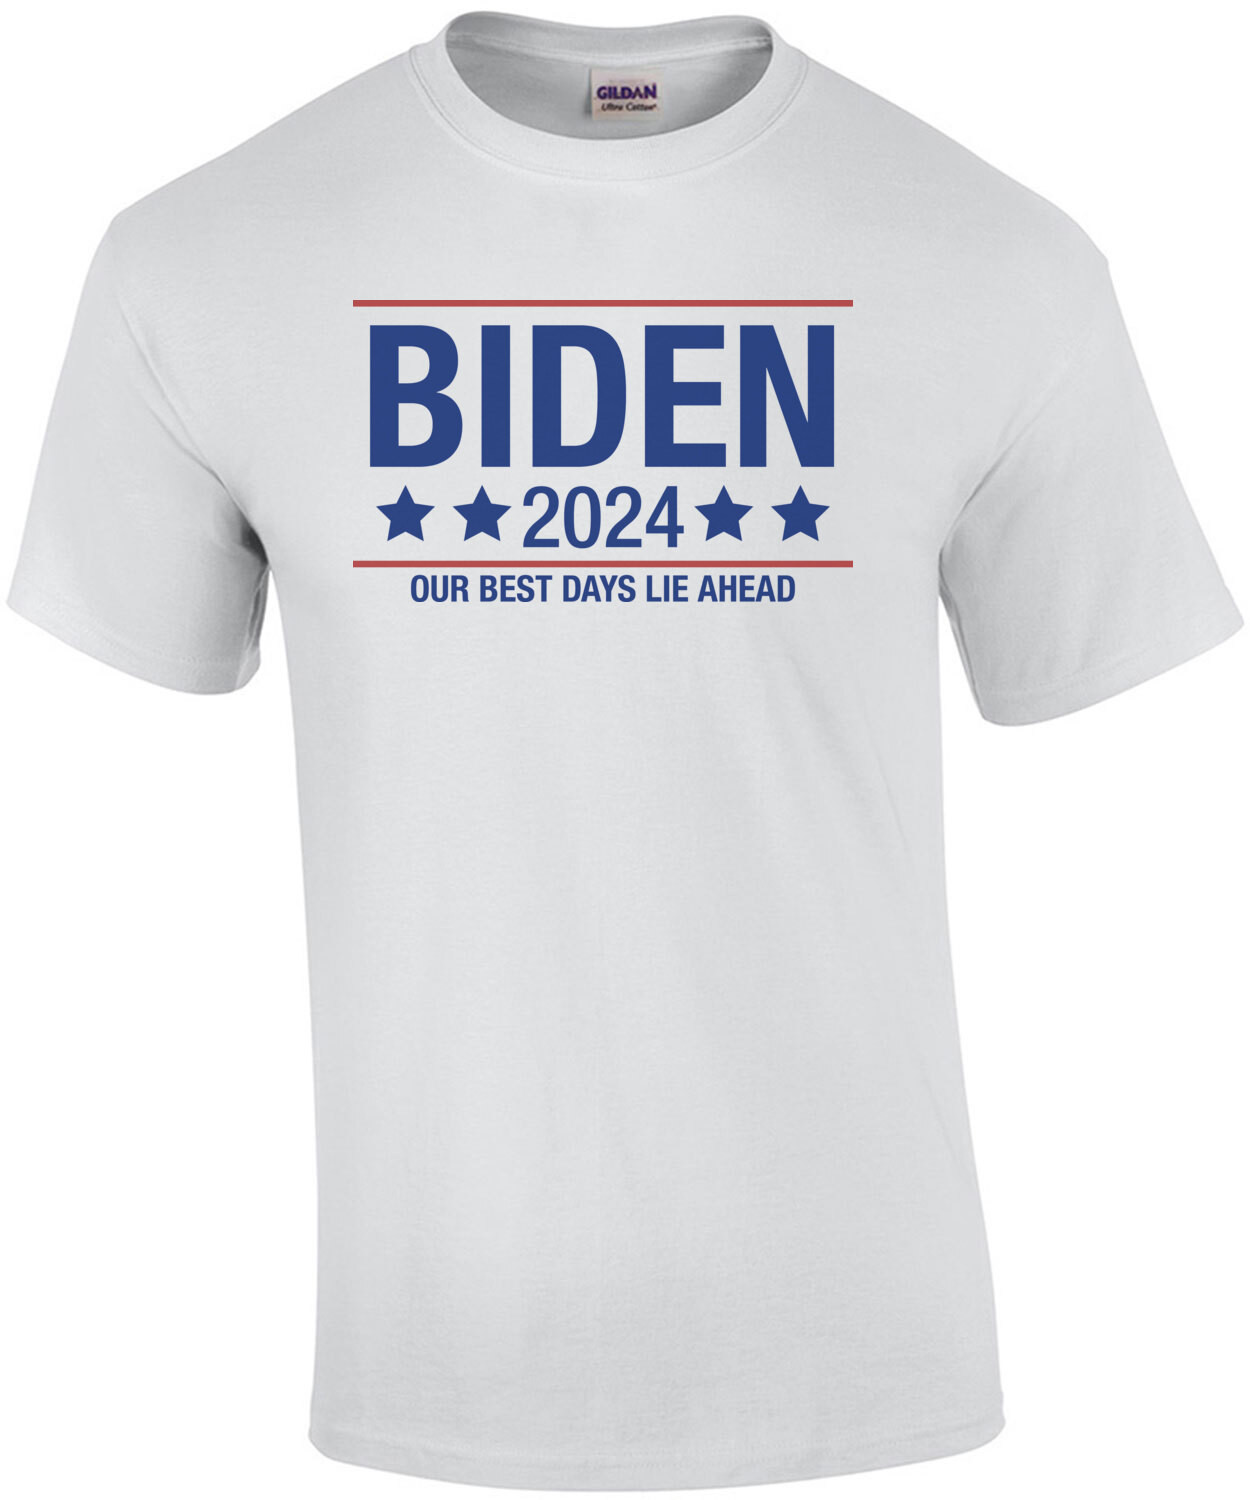 Biden 2024 Our Best Days Lie Ahead Shirt